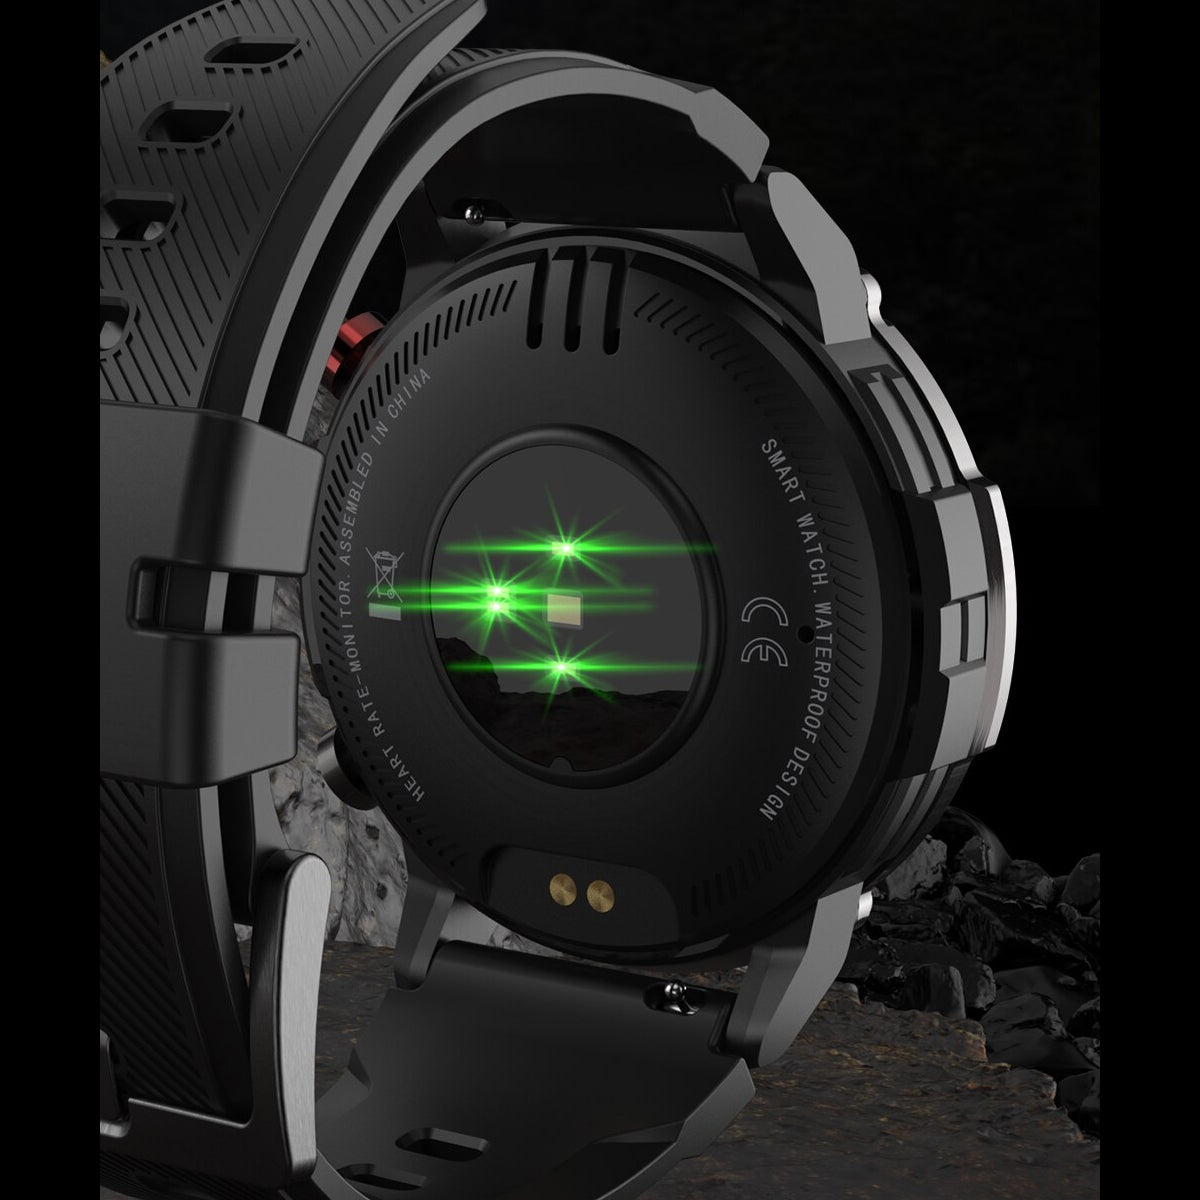 Smartwatch Reloj Inteligente Fralugio C21 Full Touch Hombre